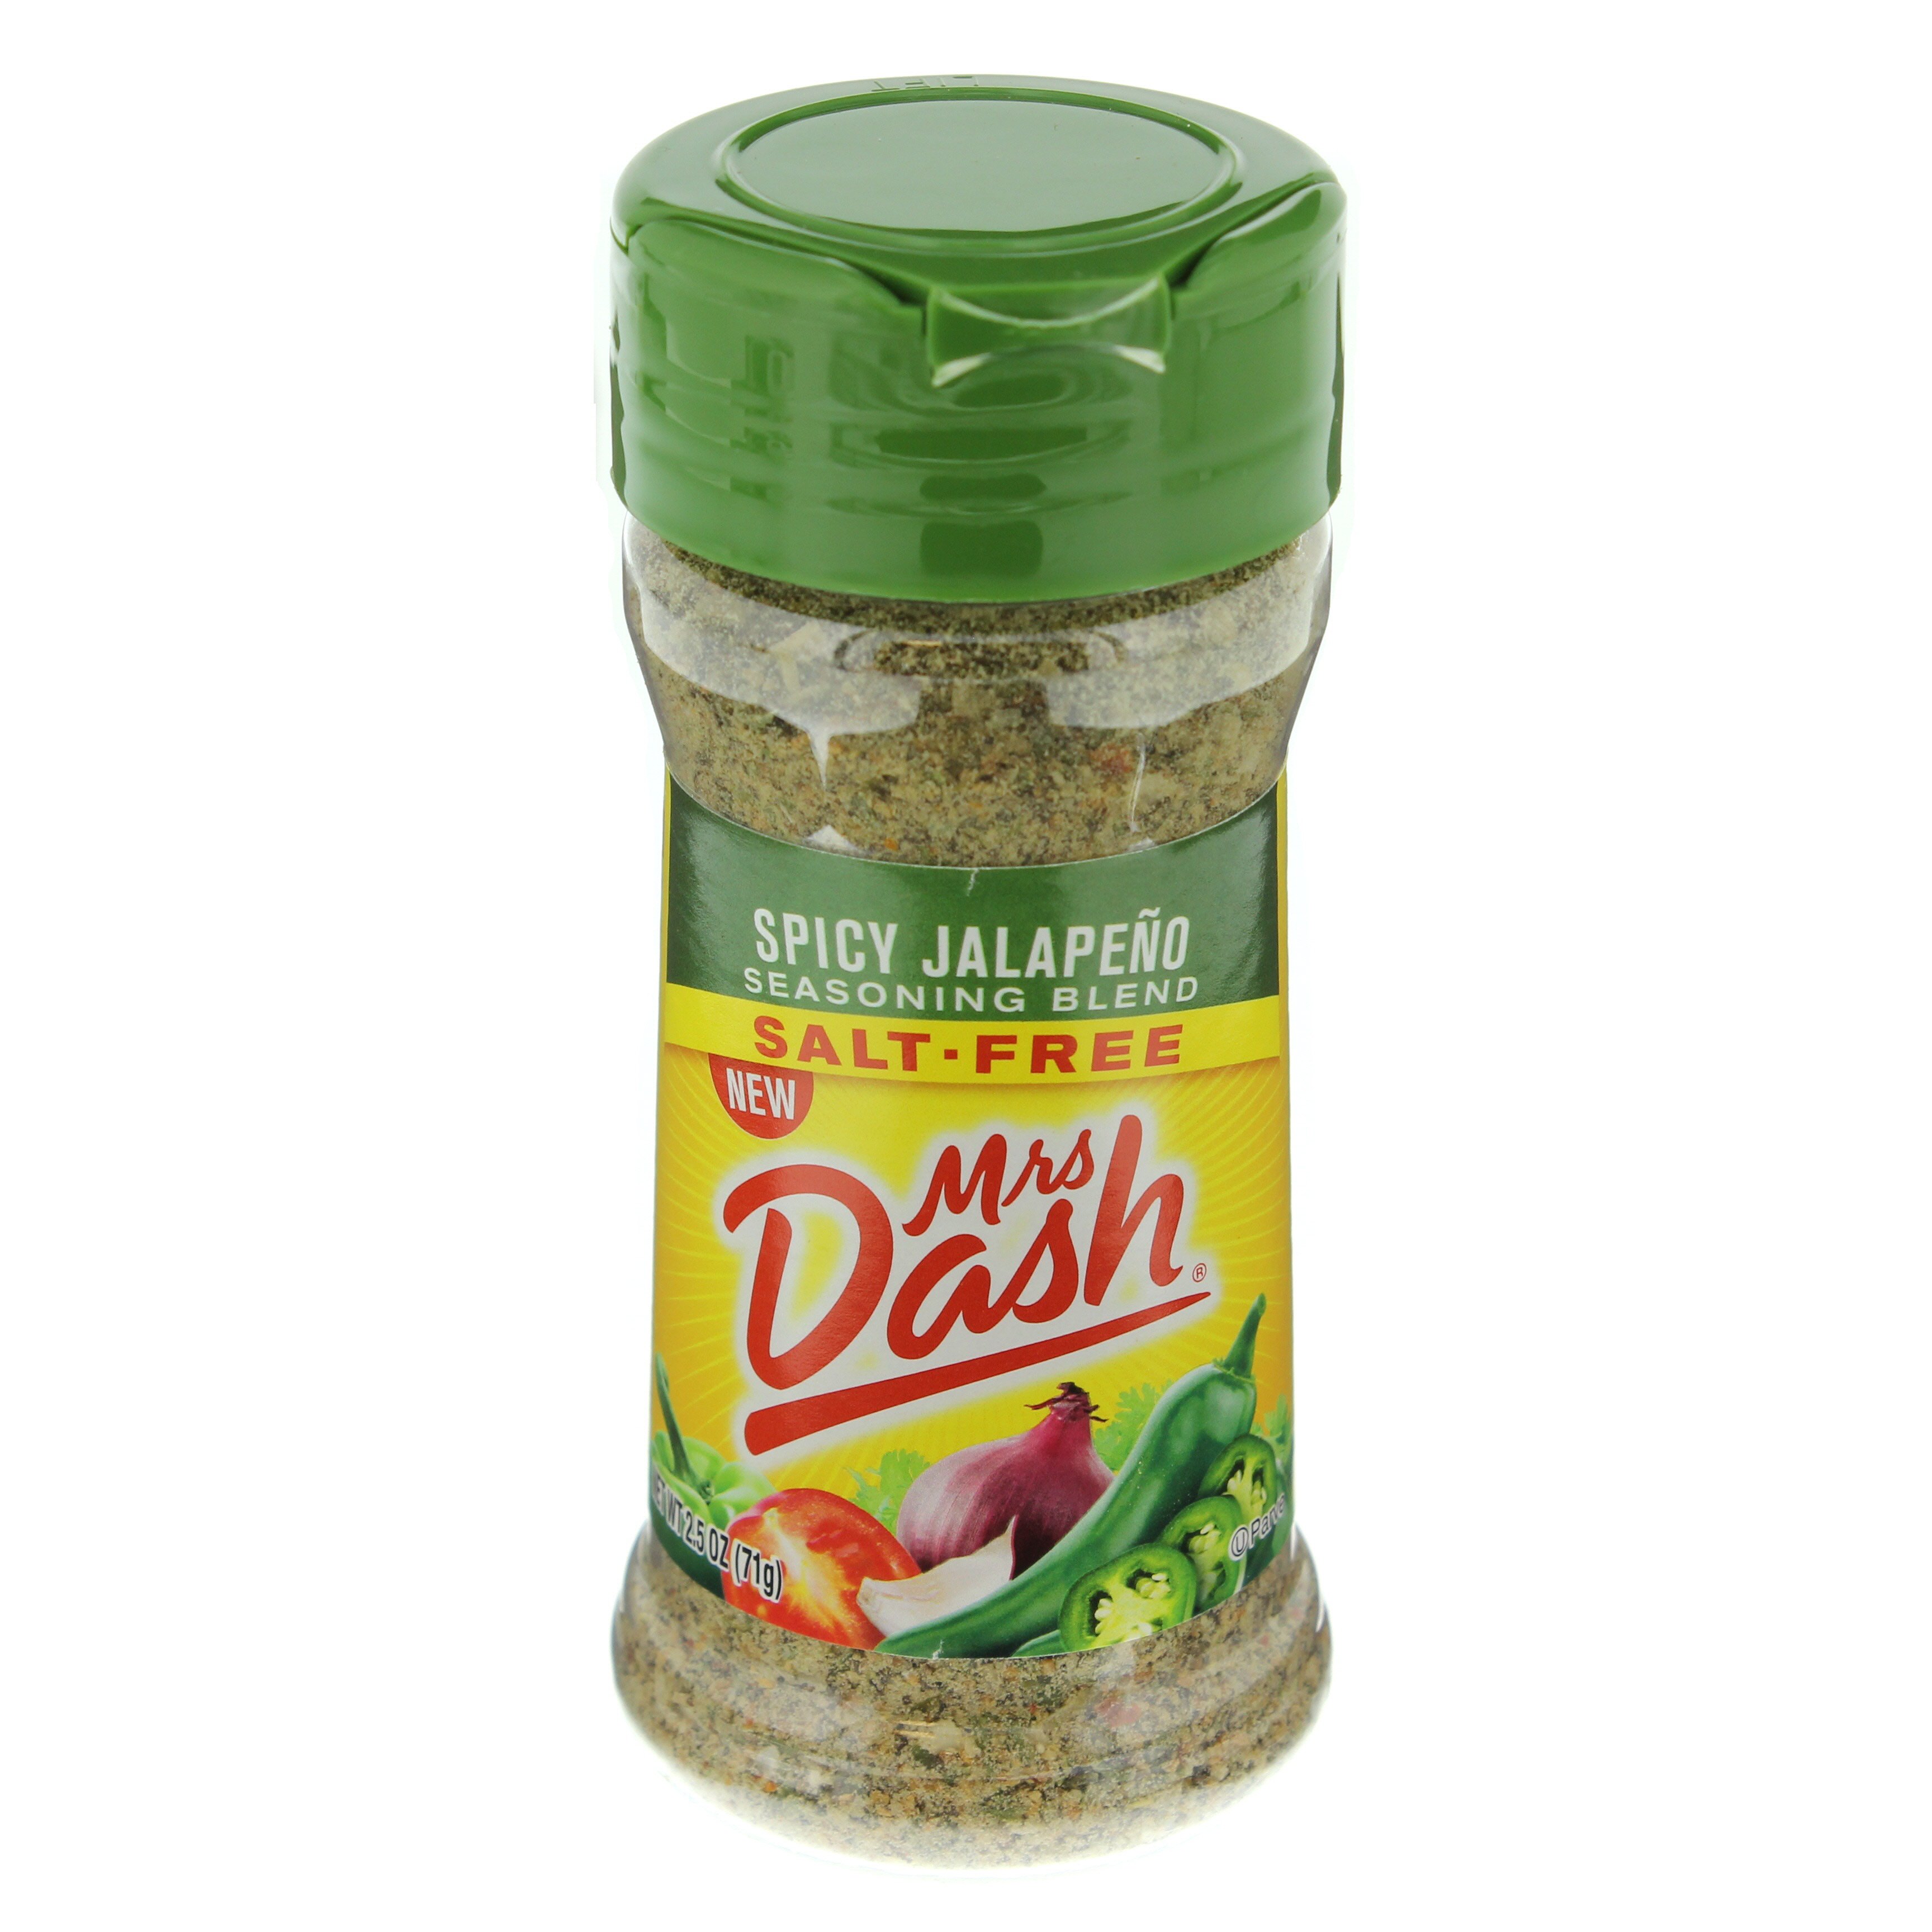 Mrs. Dash Salt-Free Spicy Jalapeno Seasoning Blend - Shop Spice Mixes at  H-E-B